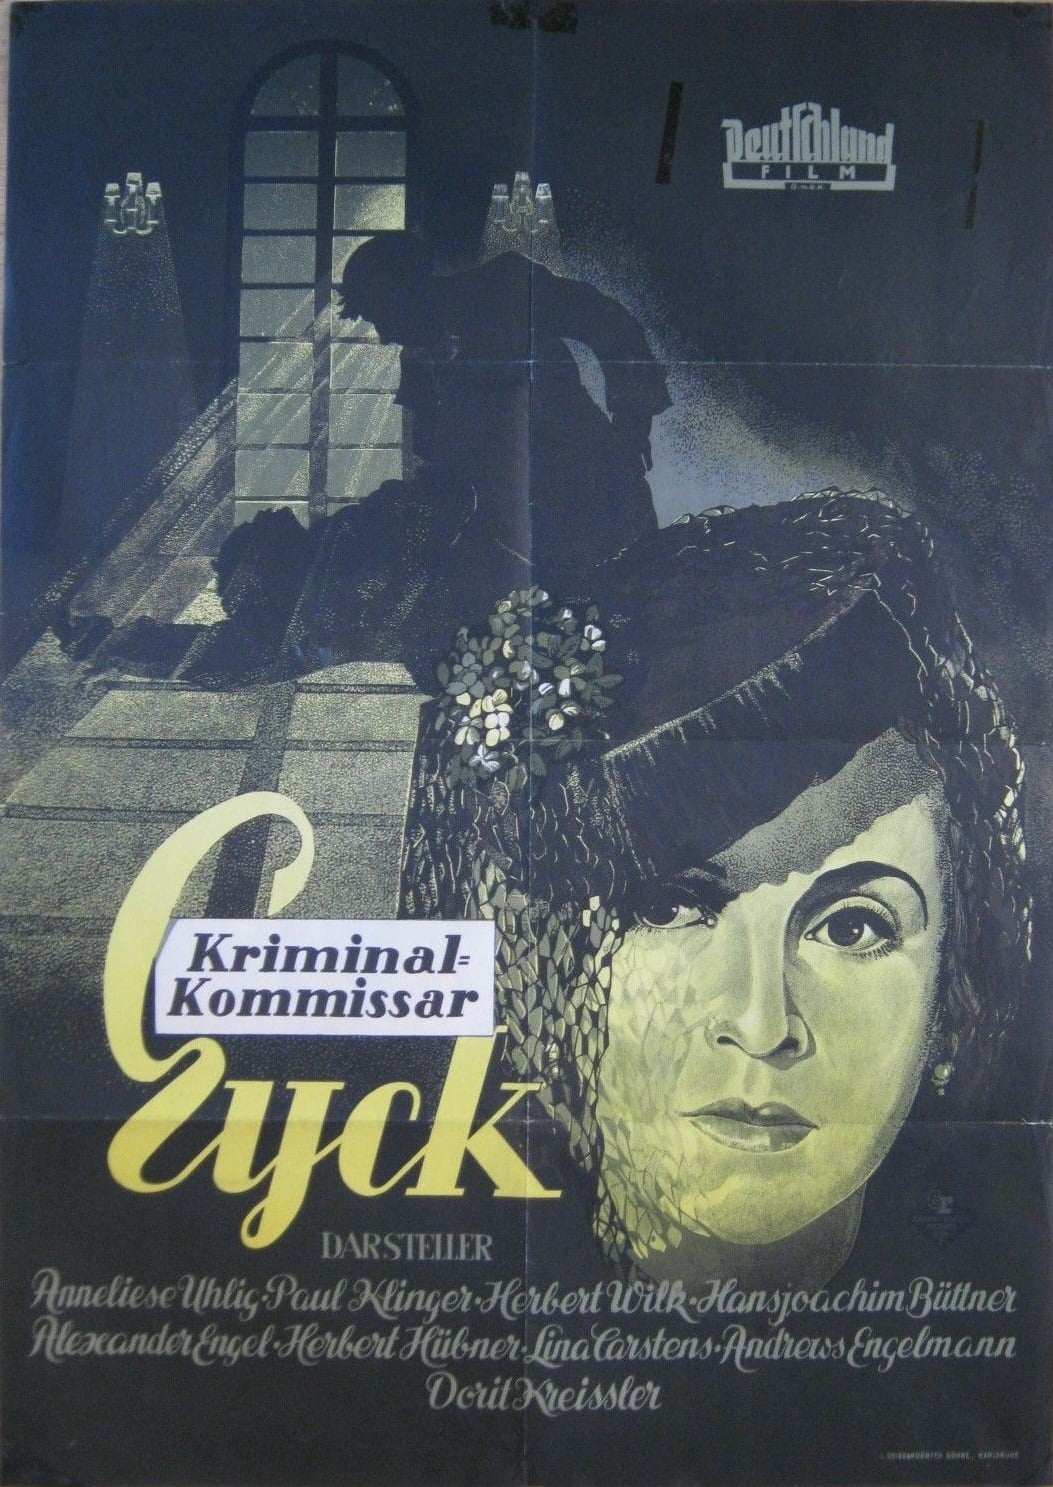 Kriminalkommissar Eyck (1940)